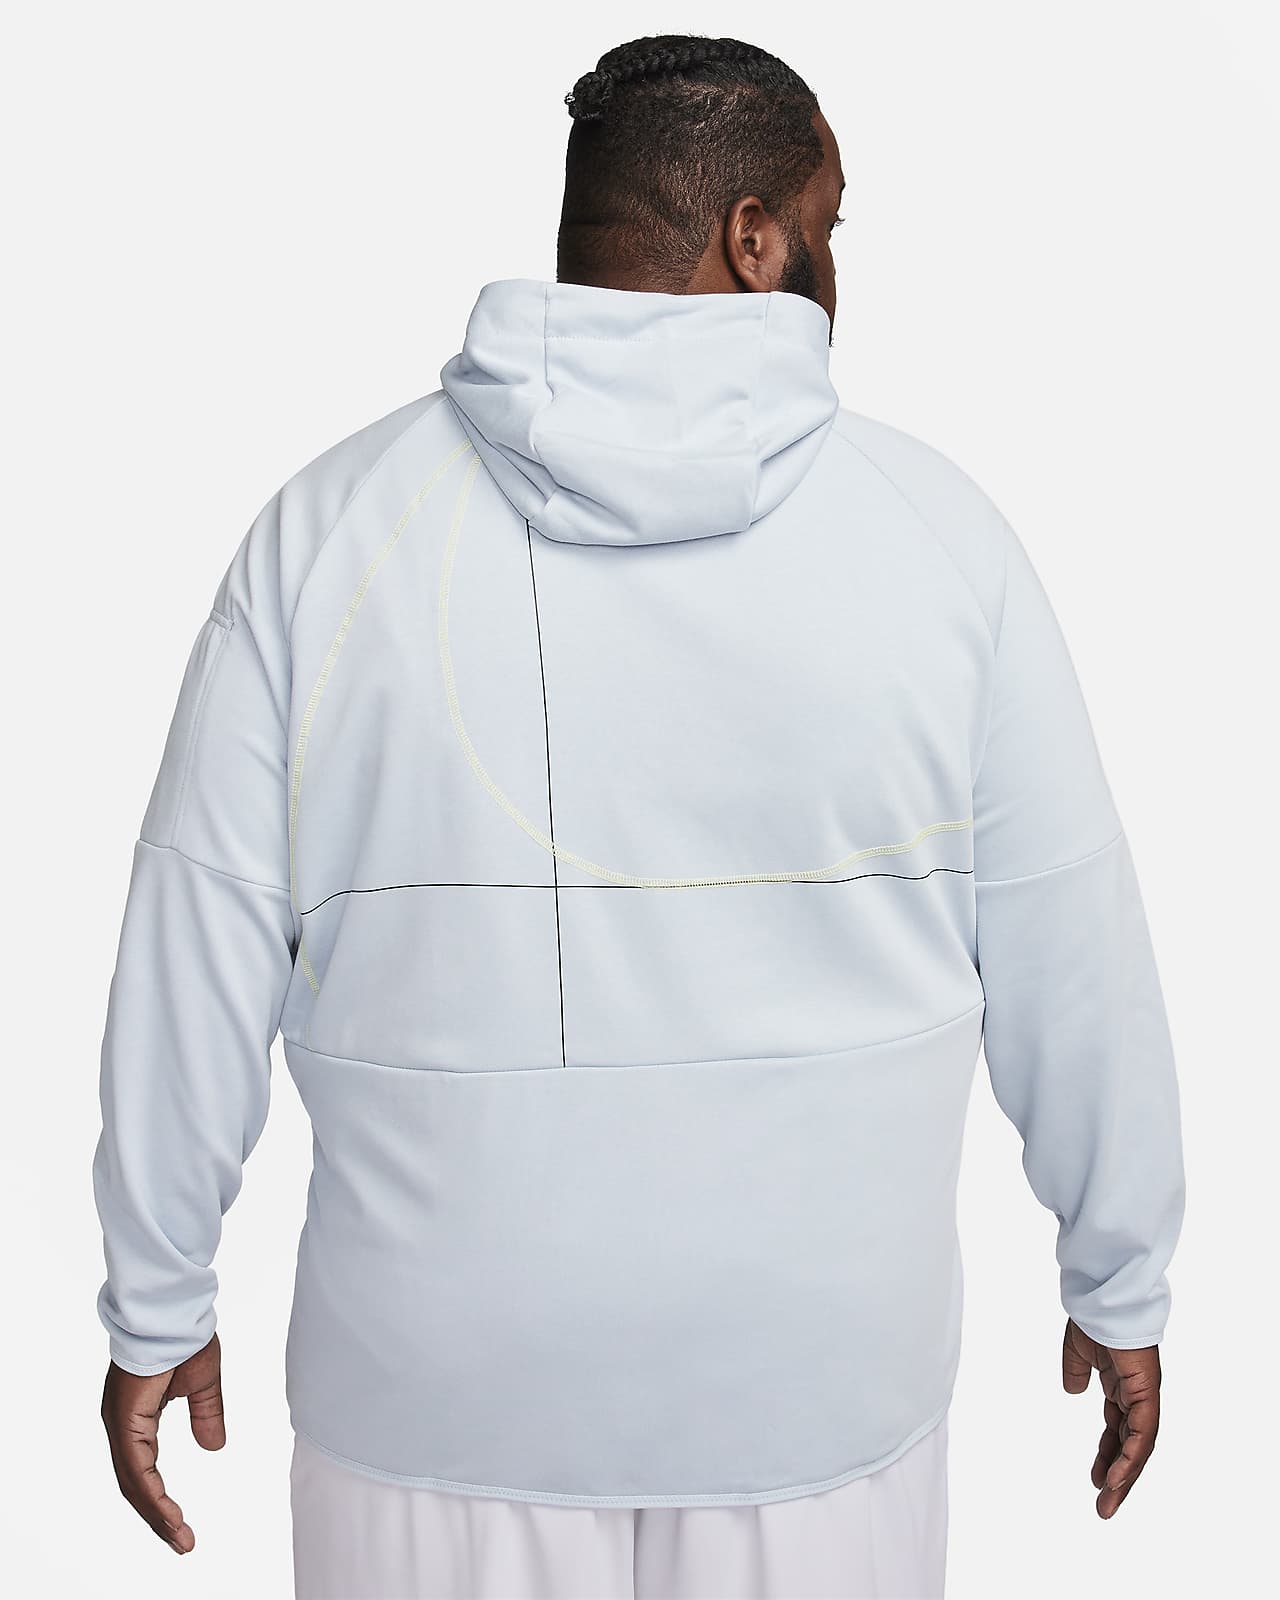 Nike Dri-FIT Men\'s Hoodie. Pullover Fleece Fitness